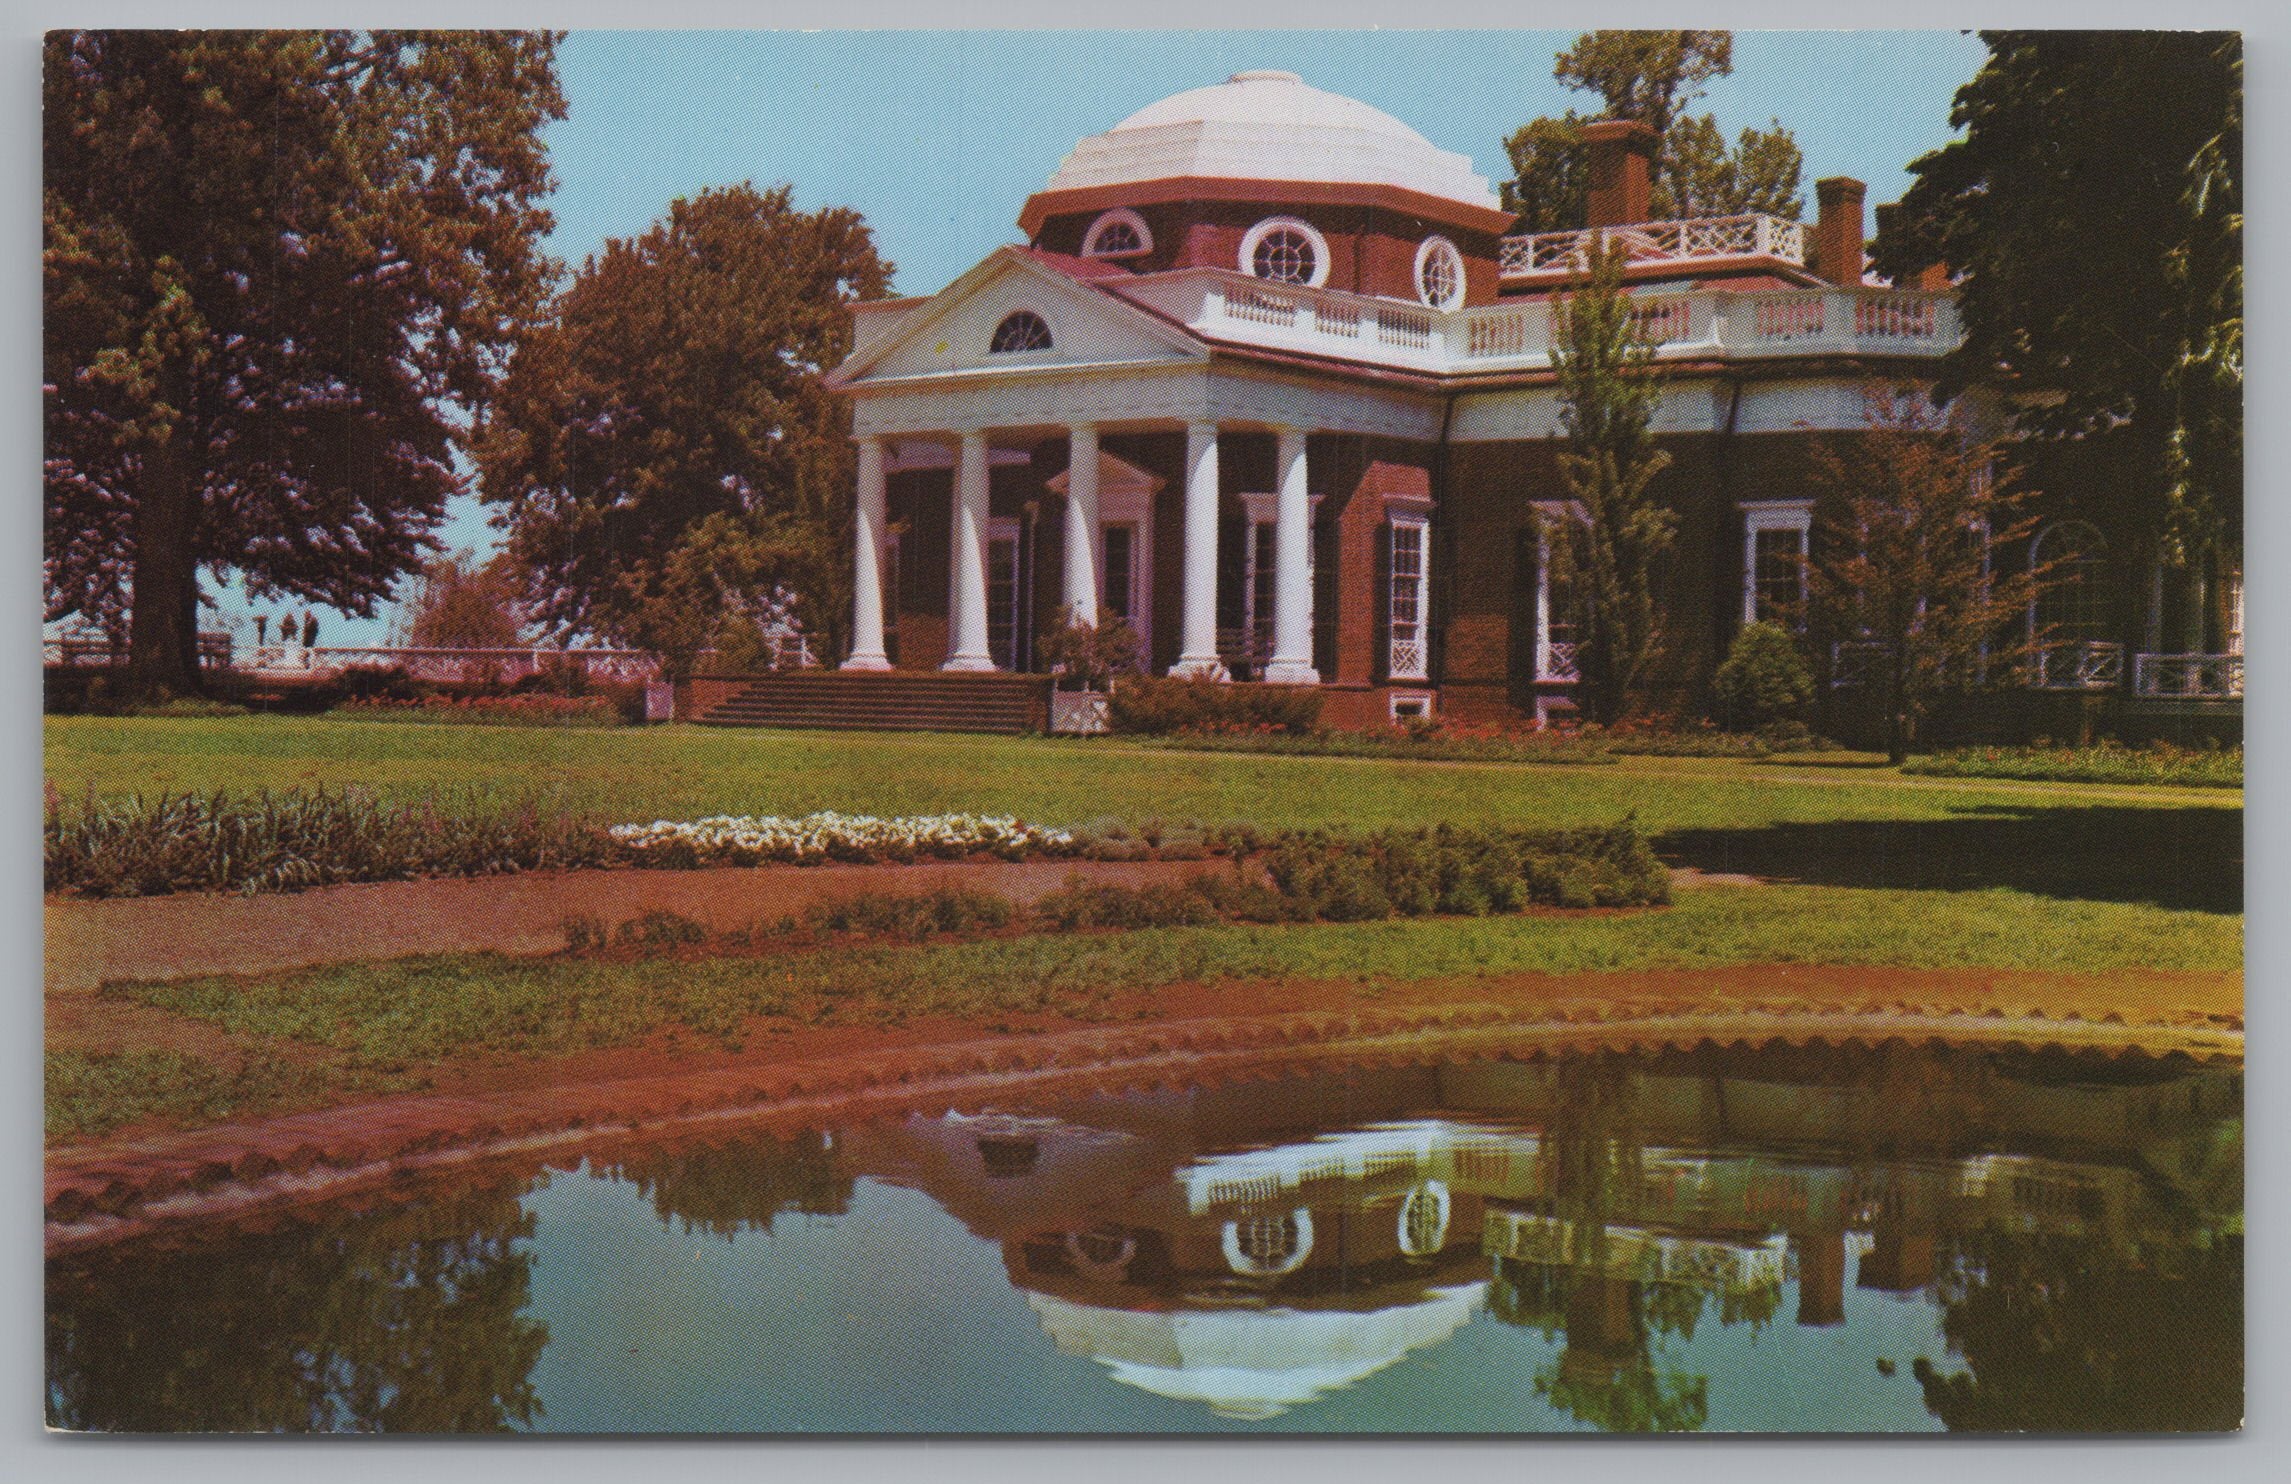 Monticello, Home Of Thomas Jefferson, Fish Pond, Garden Charlottesville, VA  VTG PC